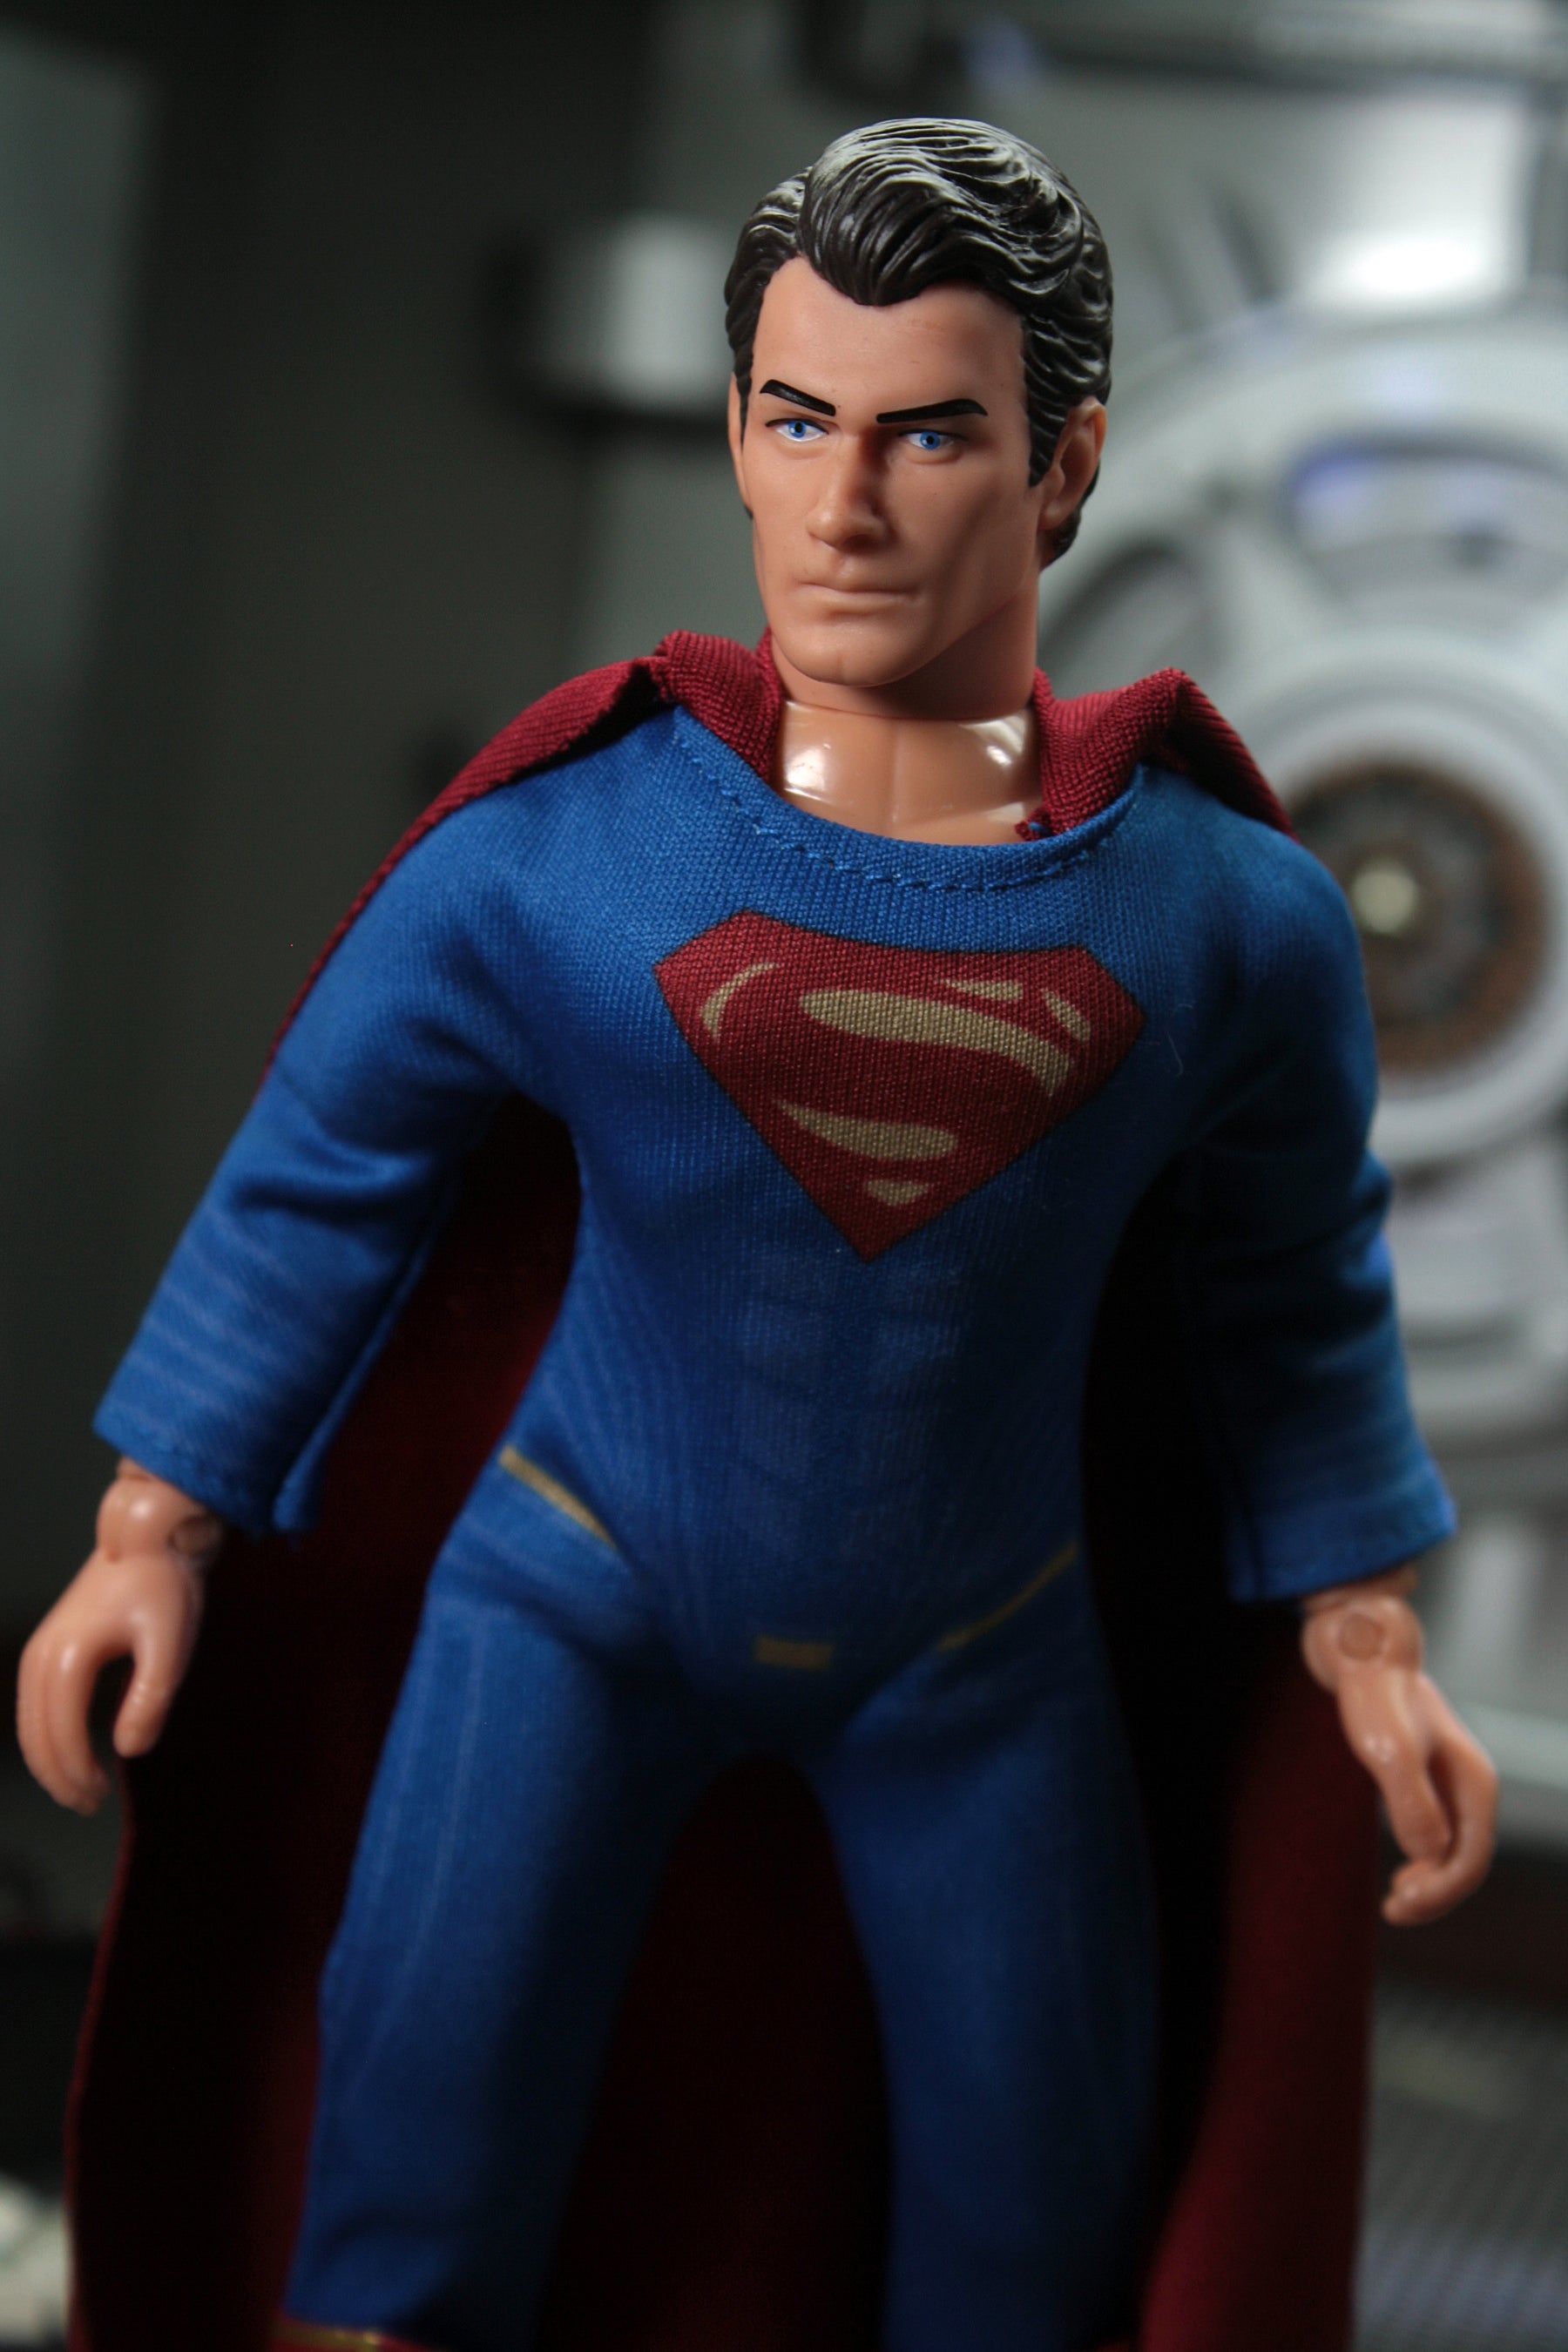 Mego DC Wave 14 - Henry Cavill Superman  8" Action Figure